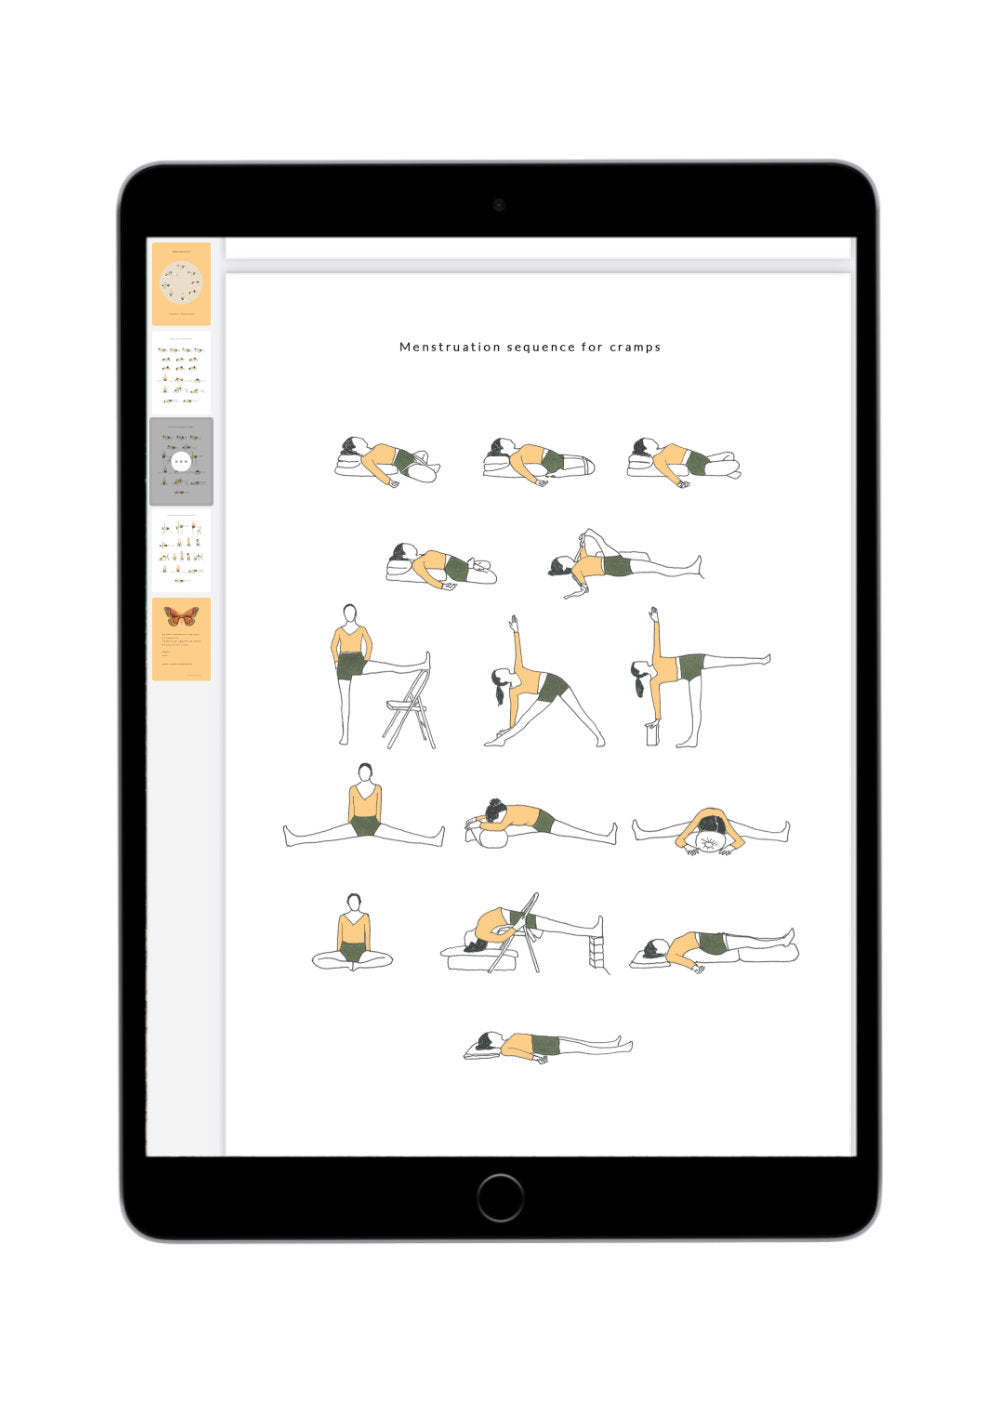 Svejar Yoga Illustrations - Menstruation Sequences - Mockup iPad